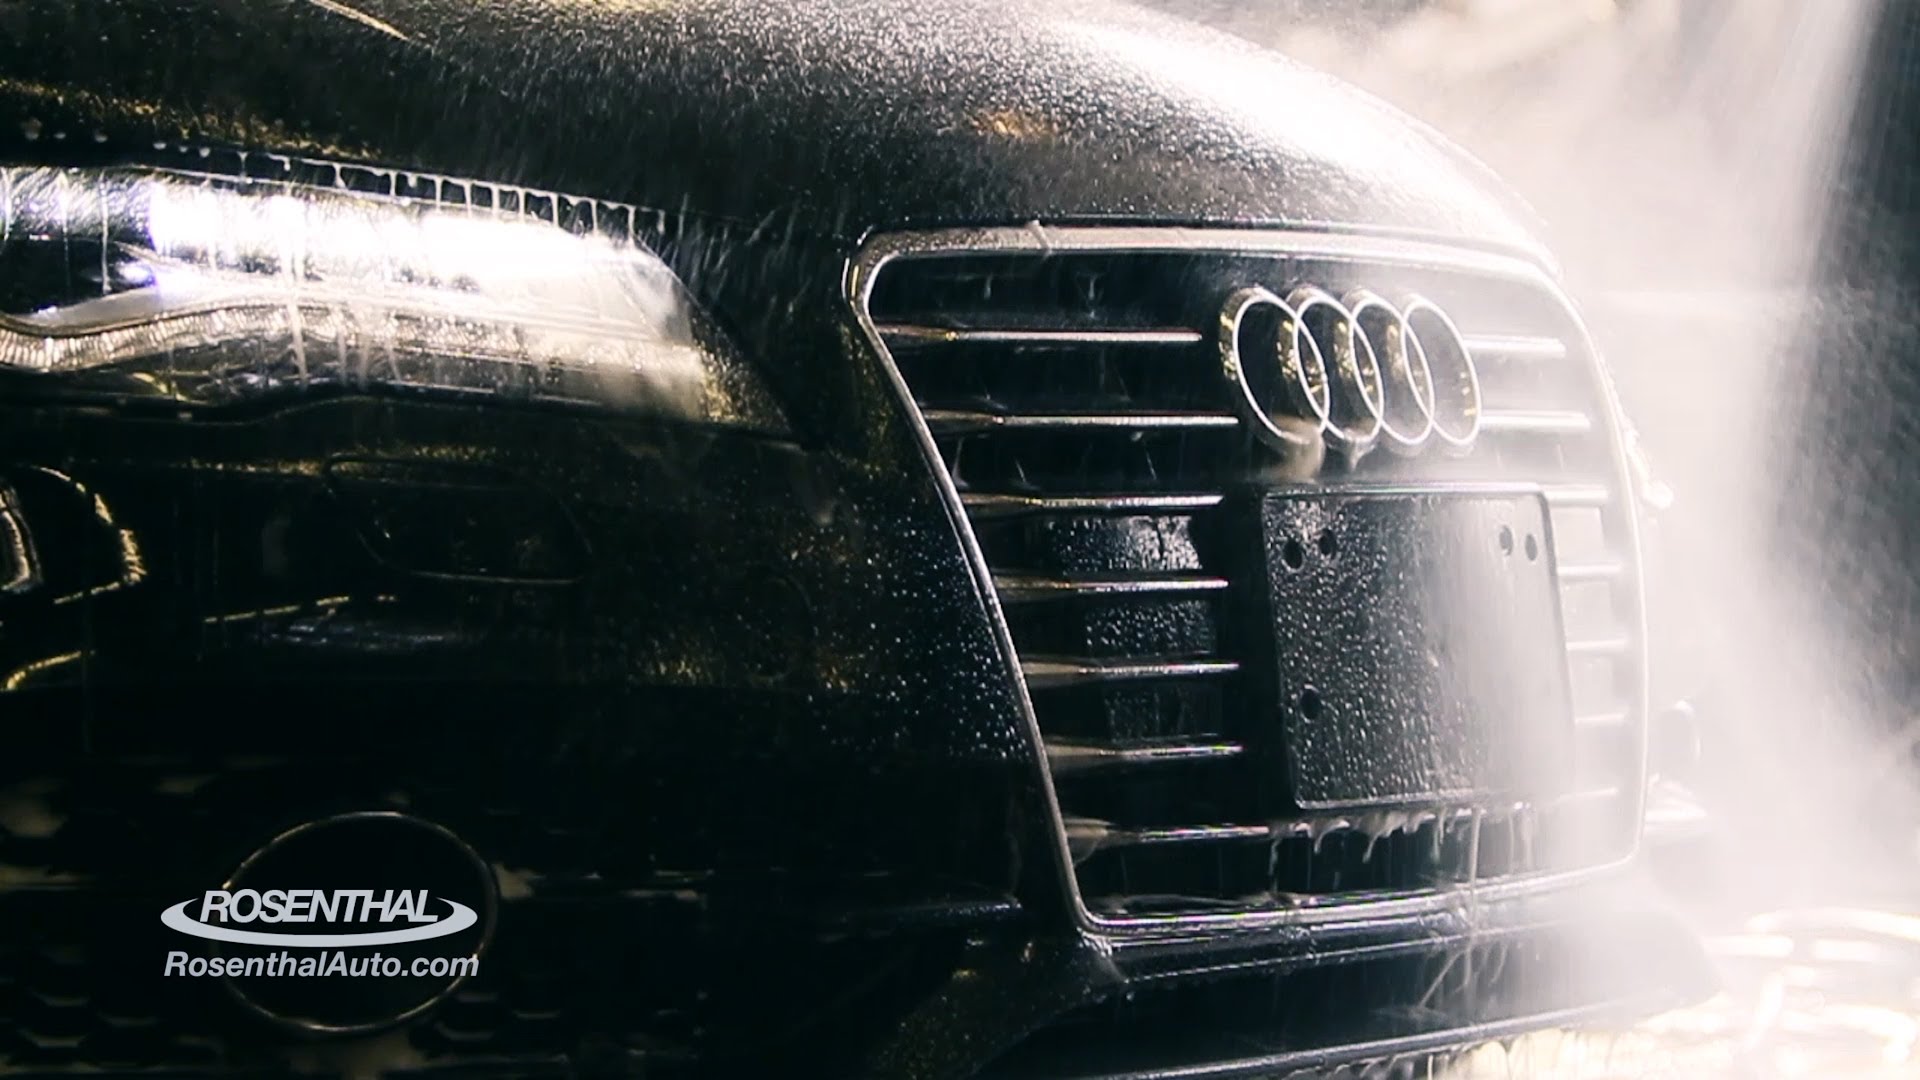 2012 Audi A7 Test Drive Amp Review - Audi A7 Hd Wallpapers 1080p - HD Wallpaper 